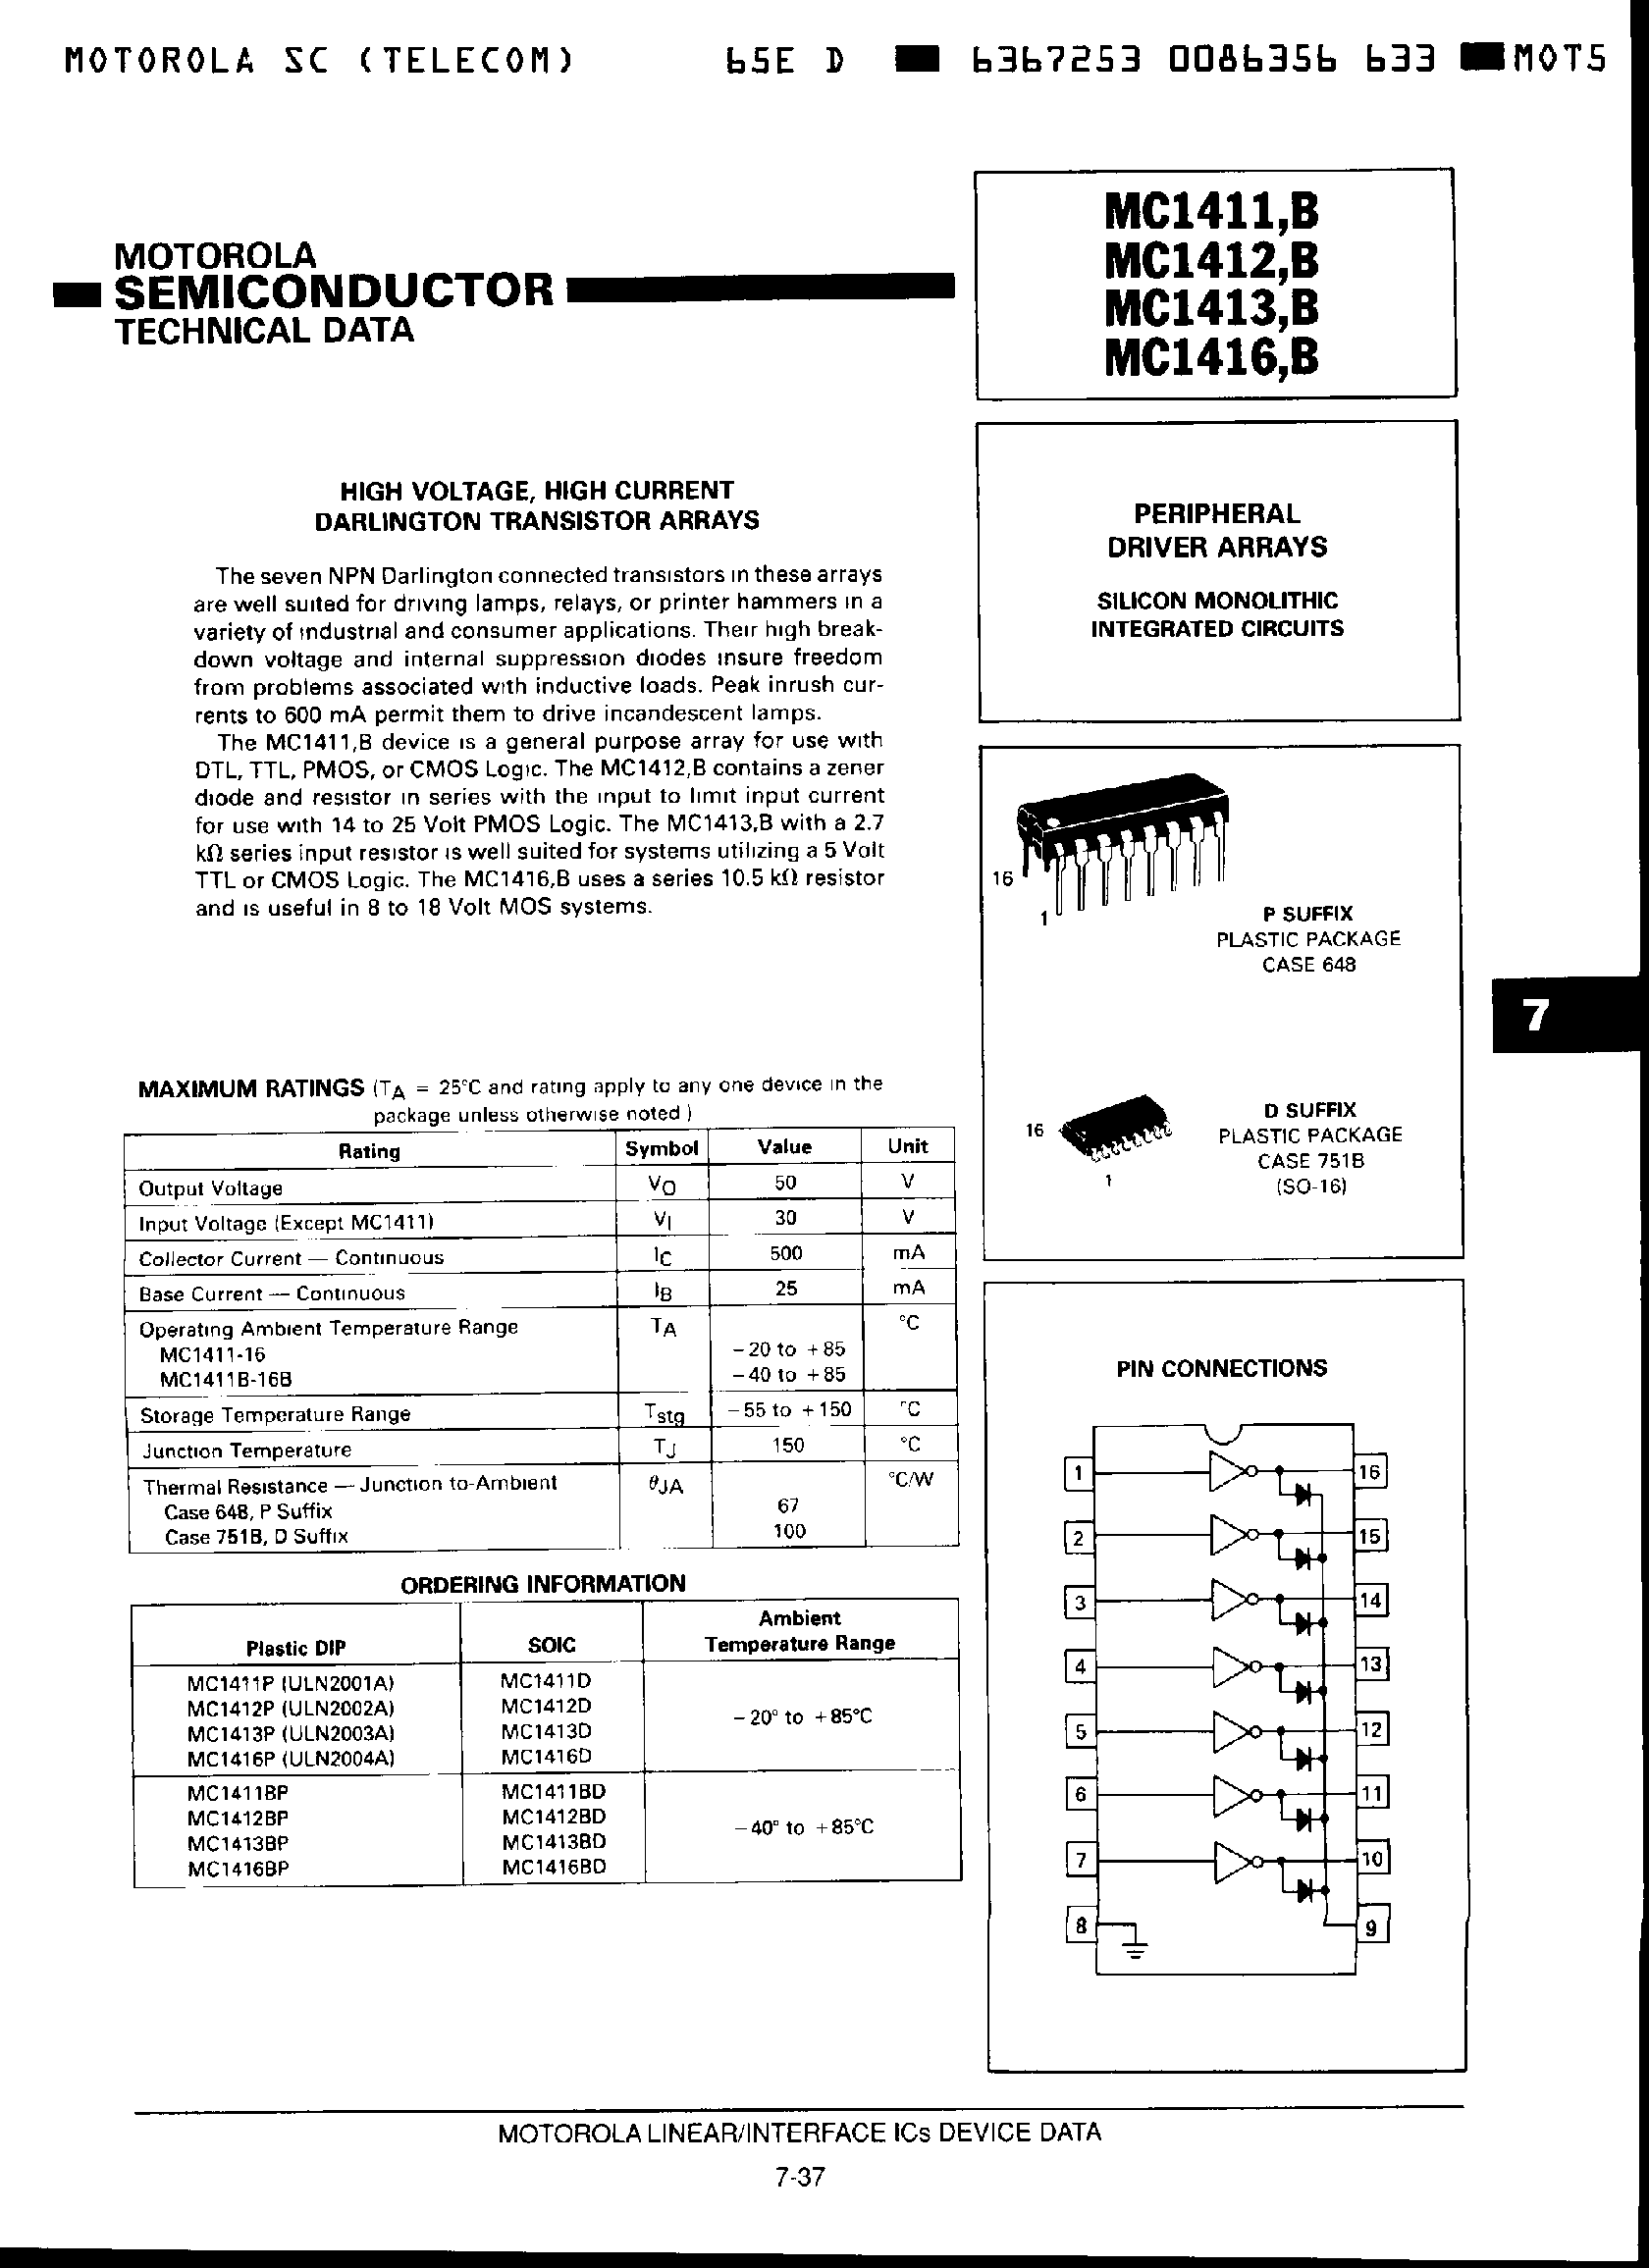 Datasheet MC1412P - PERIPHERAL DRIVER ARRAYS page 1